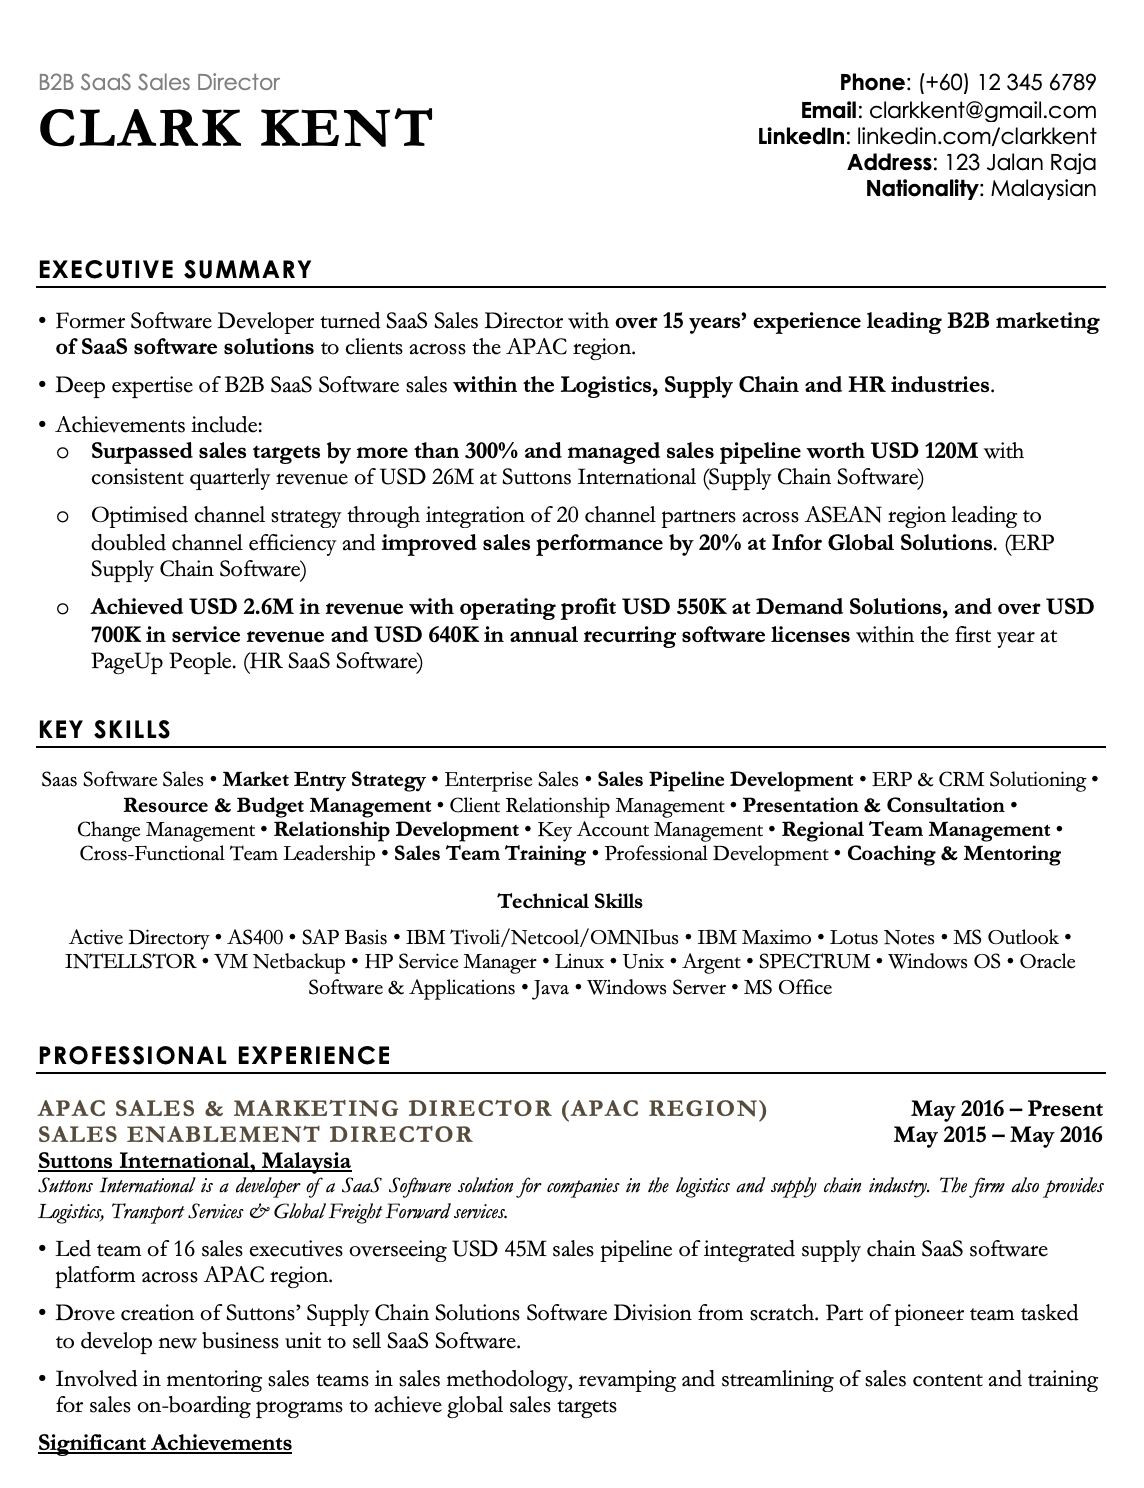 Sample Of A Good Resume In Malaysia 10lancarrezekiq Professional Resume Templates Downloadable Cv Templates